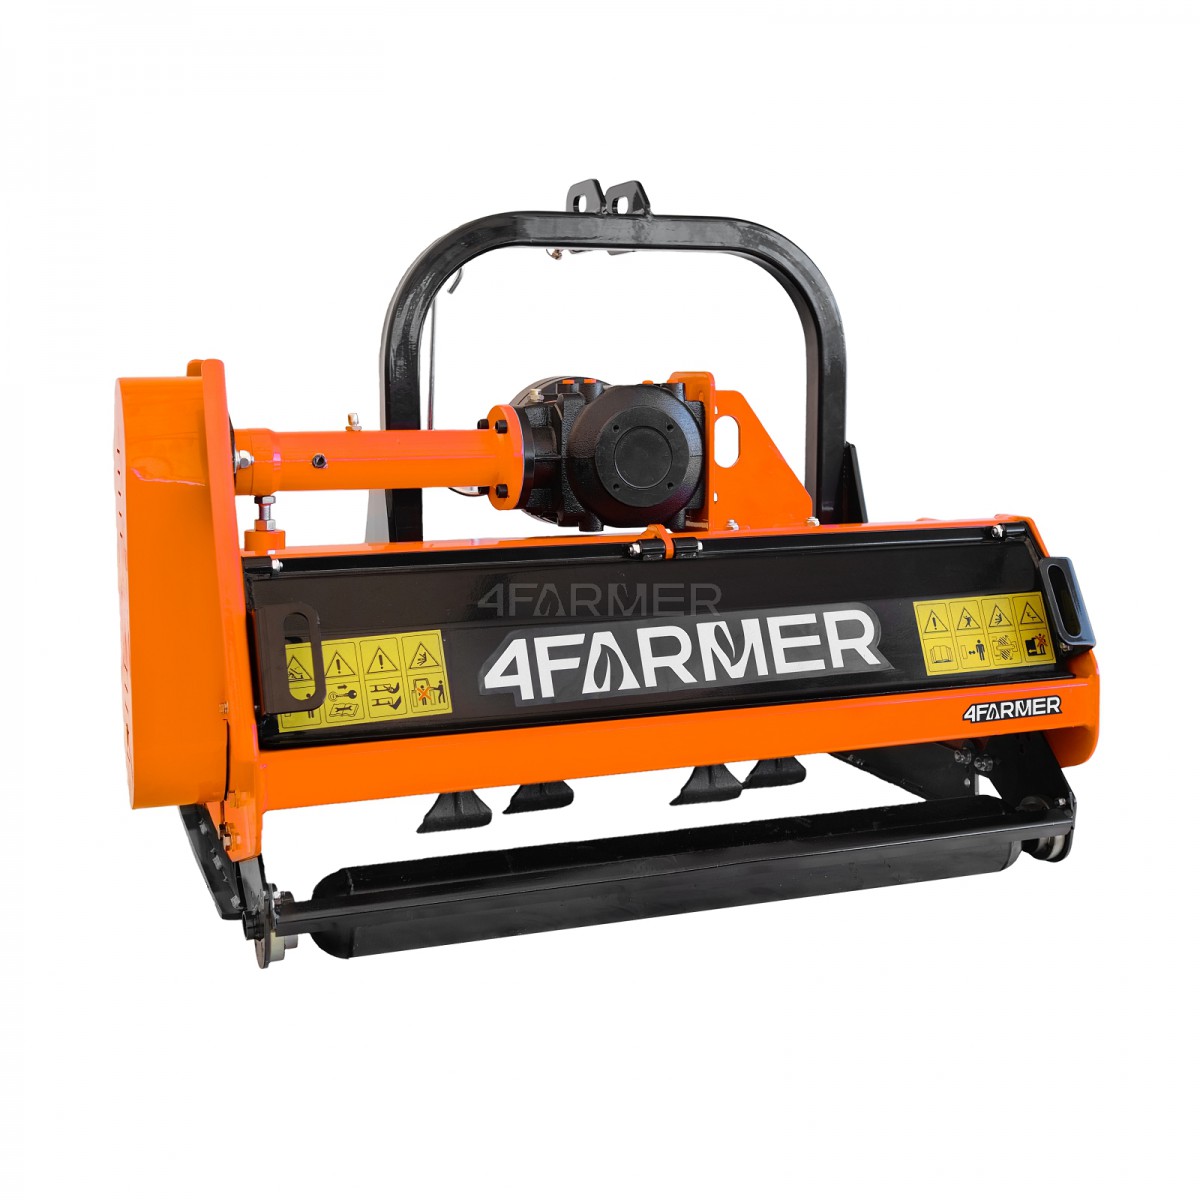 Schlegelmäher EFGC 105D 4FARMER - orange